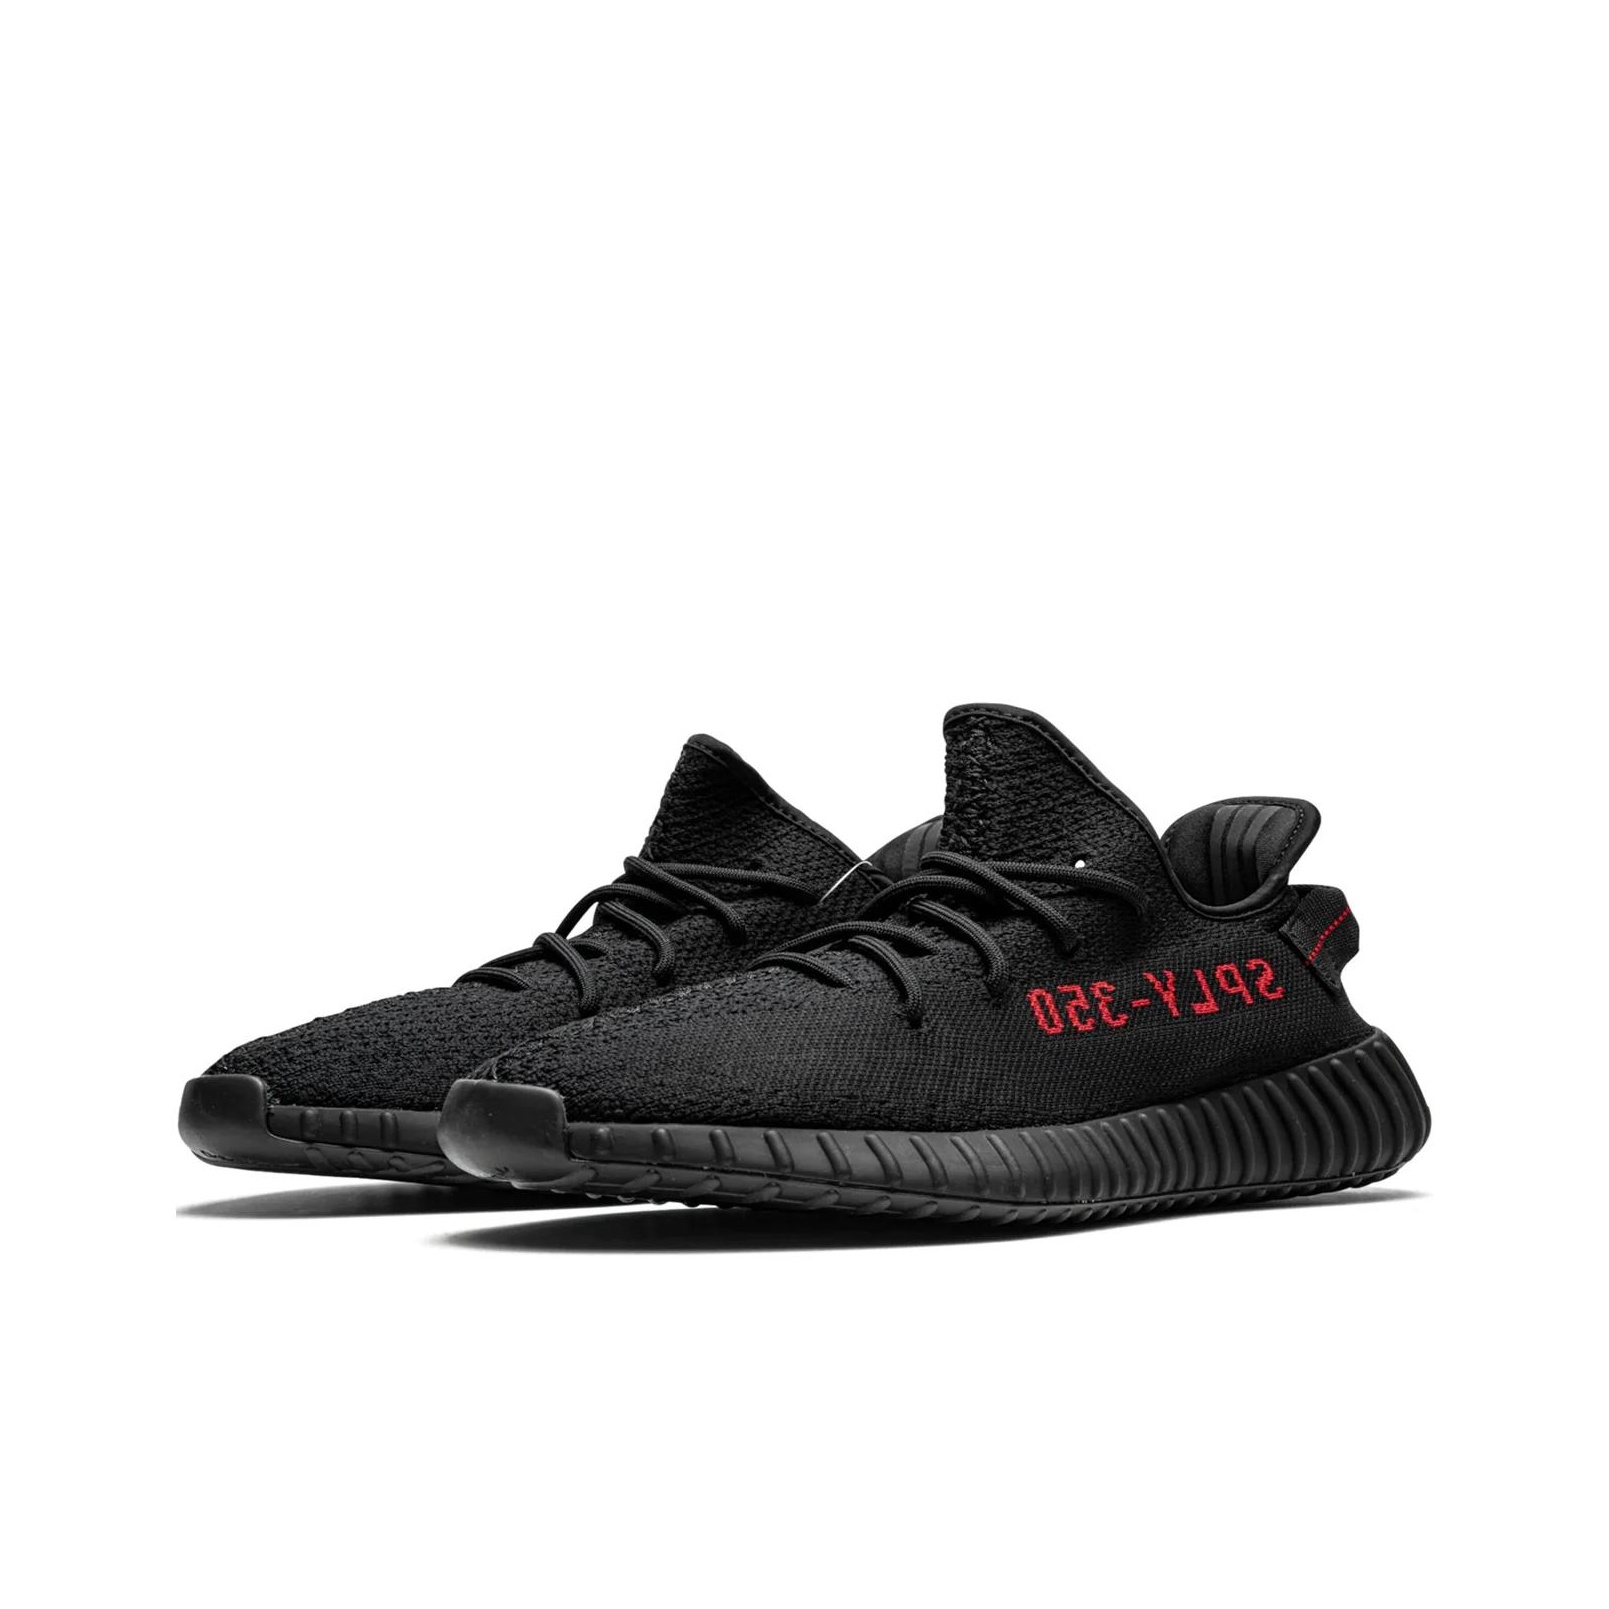 Adidas Yeezy Boost 350 V2 Black Red - POIZON